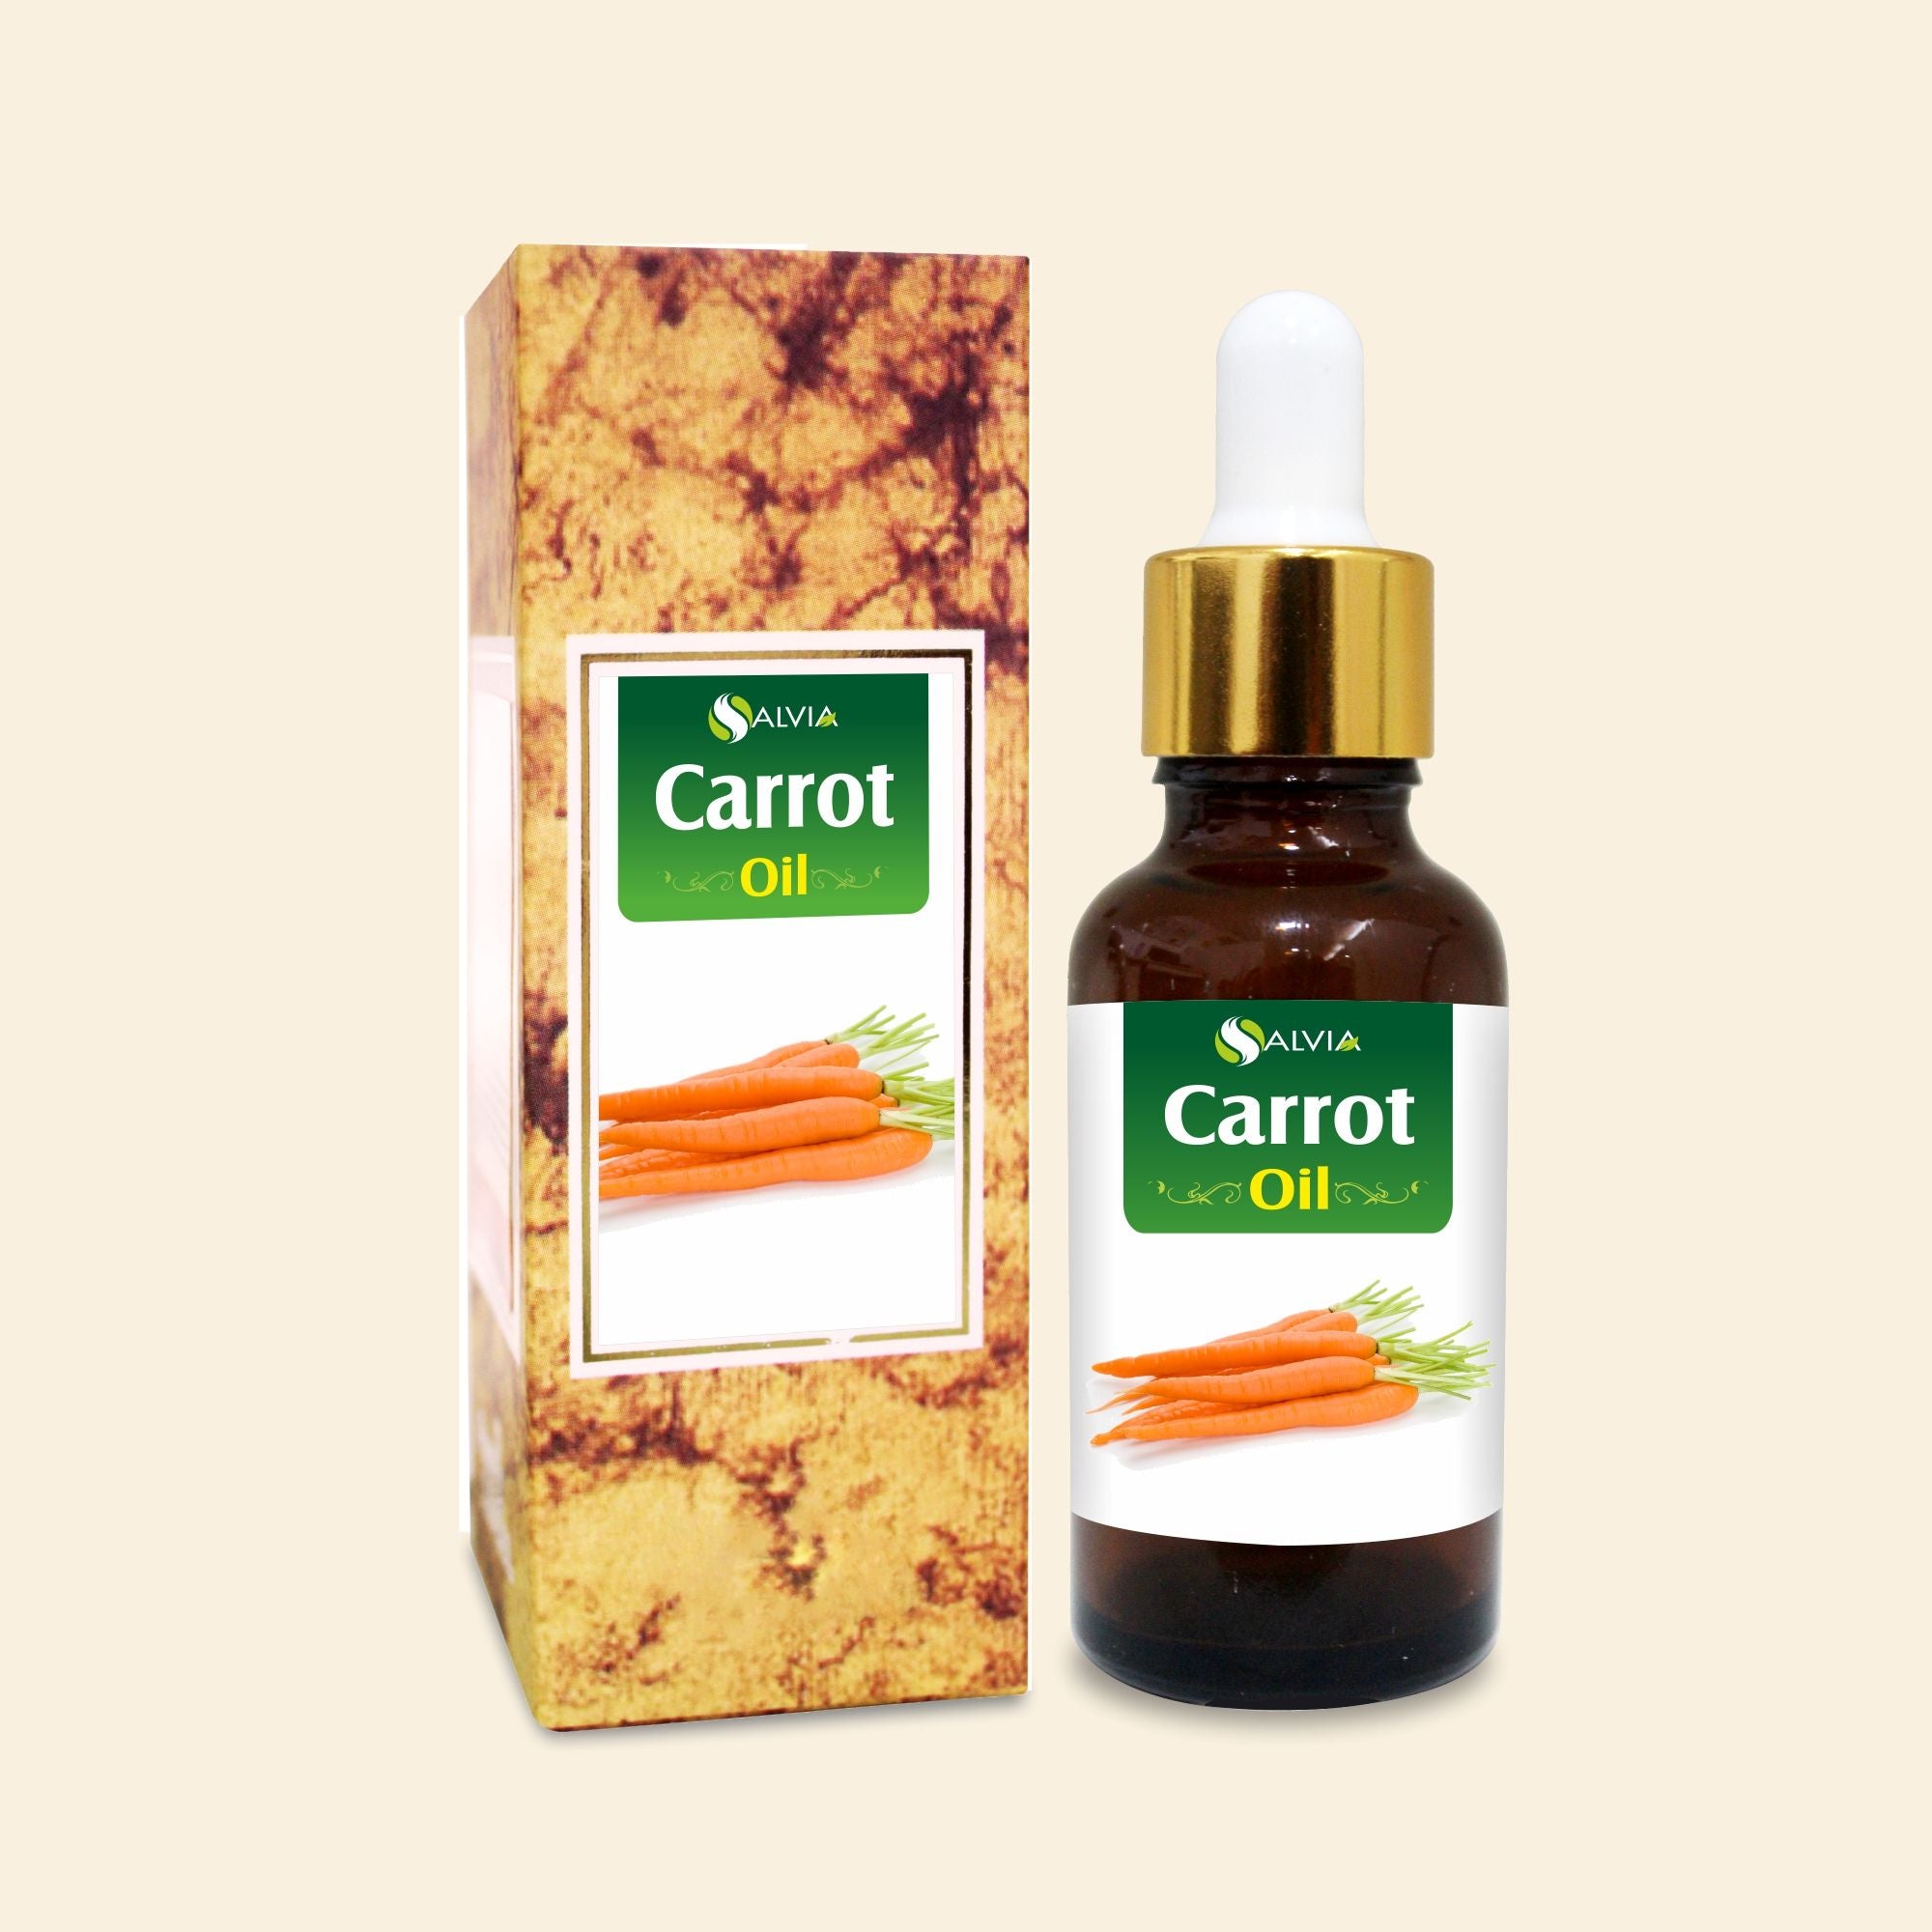 Salvia Natural Essential Oils Carrot Oil (Daucus carota) Pure Undiluted Natural Essential Oil